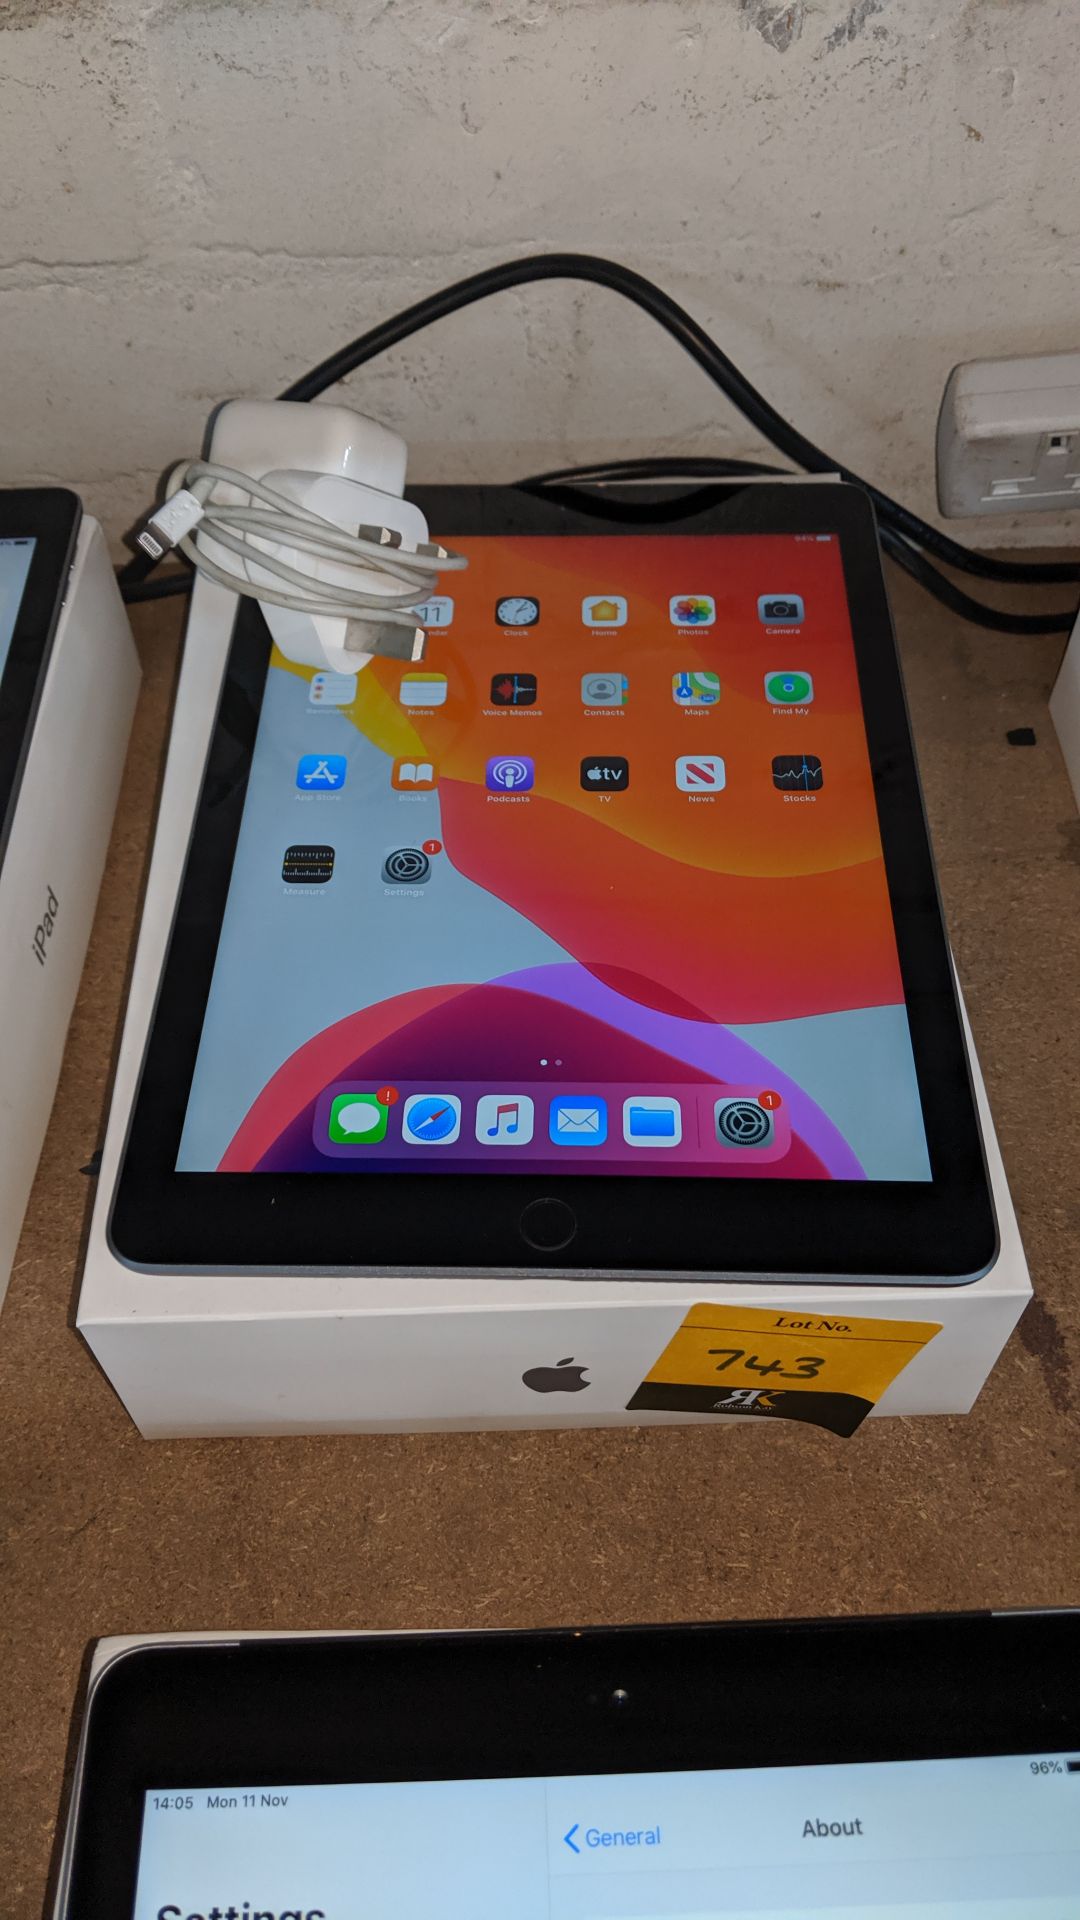 Apple iPad 6th Generation, wi-fi & cellular, 32Gb, product model A1954